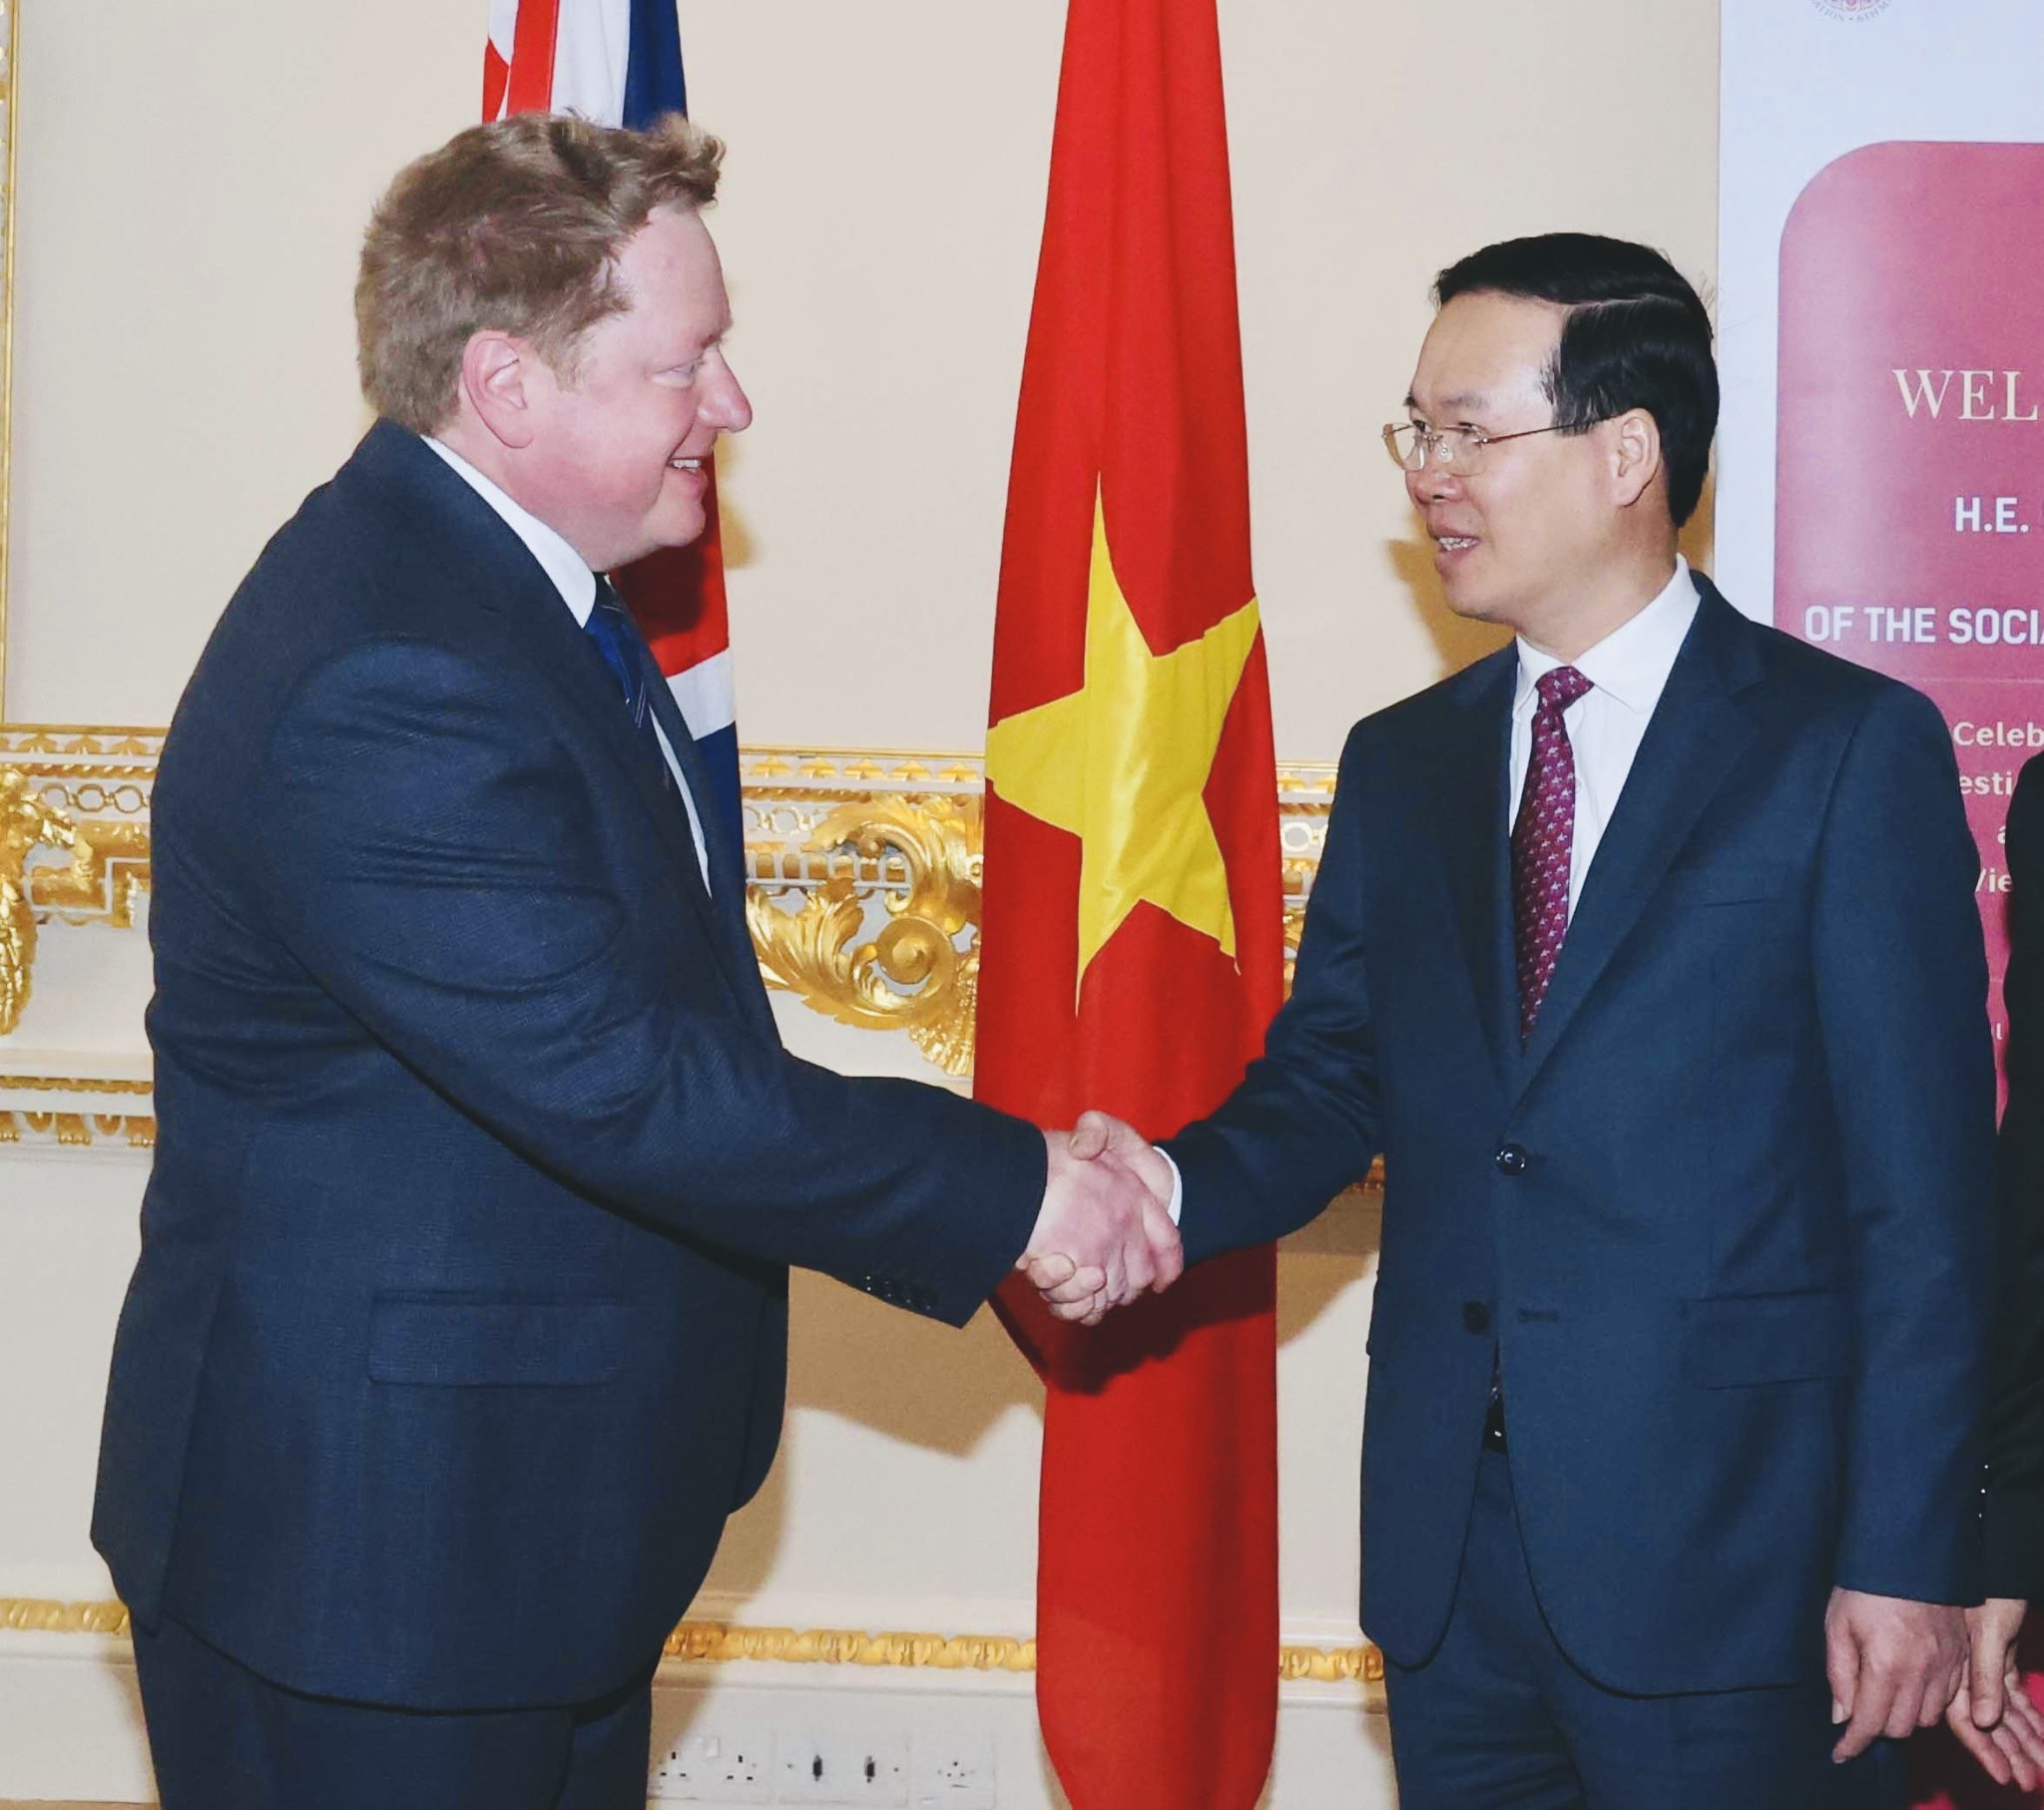 Executive Headmaster of RGSV Mr. Shaun Fenton welcomed Vietnam President Vo Van Thuong at the invitation of the Vietnamese Embassy in London